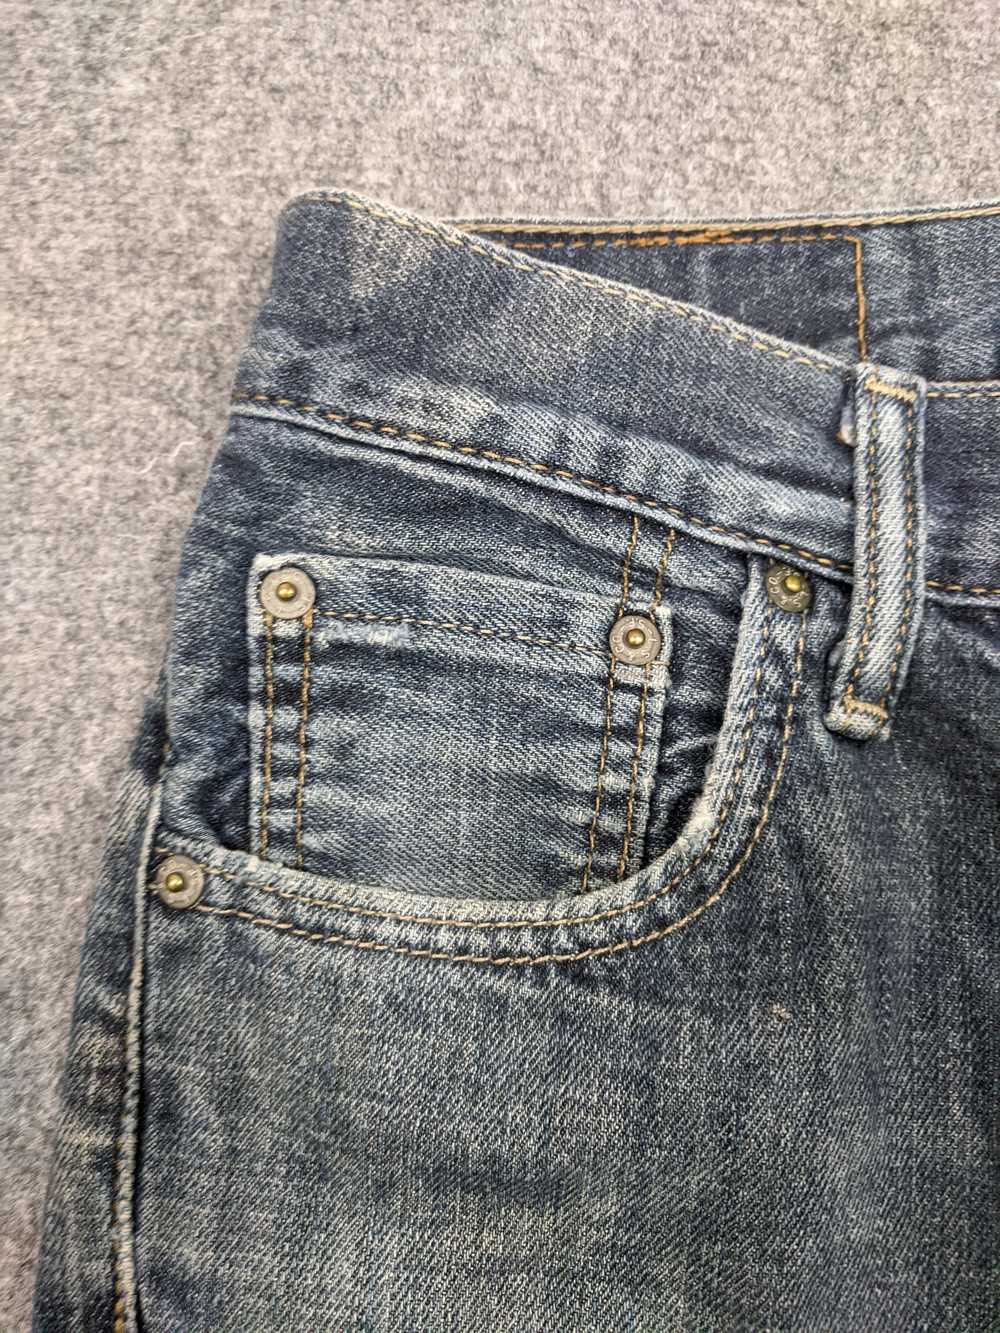 Vintage - Vintage Levis 527 Jeans - image 7